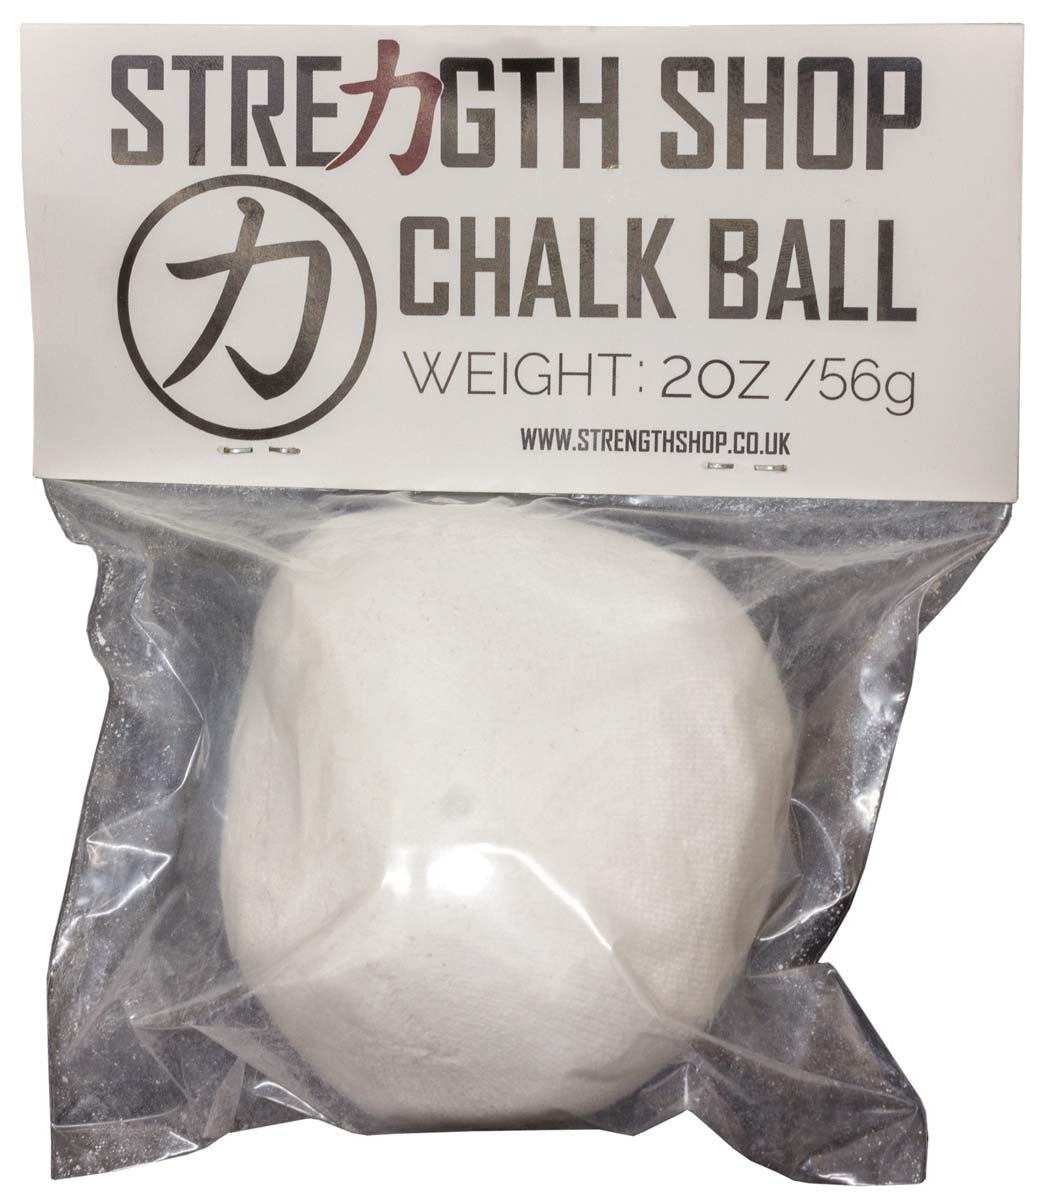 Strength Shop Chalk Ball - 56g (2oz) - Strength Shop USA